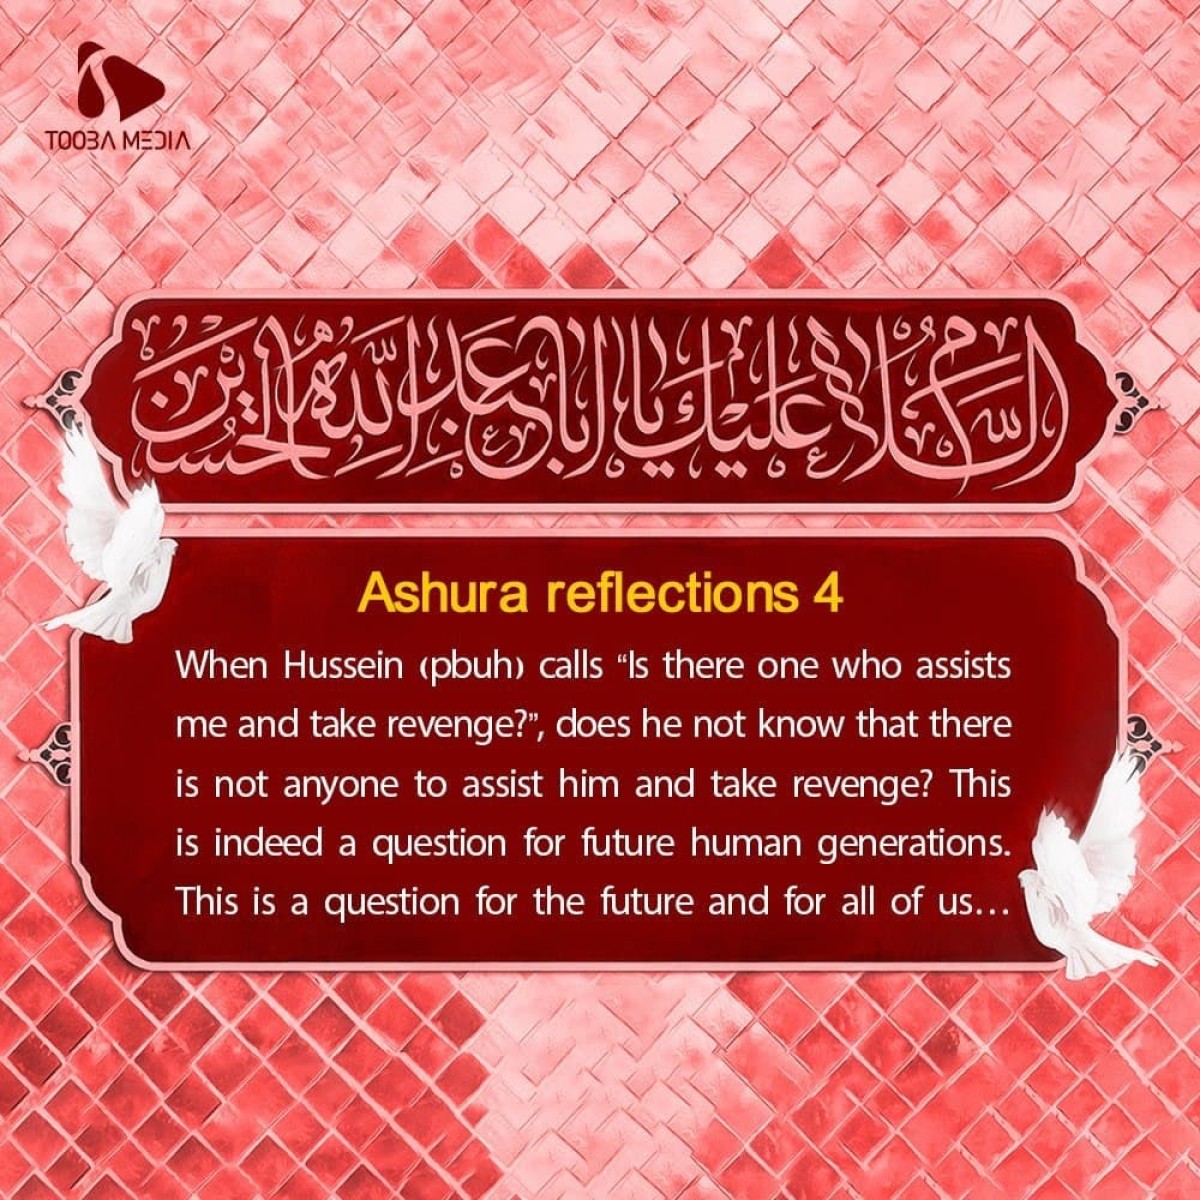 Ashura reflections 4